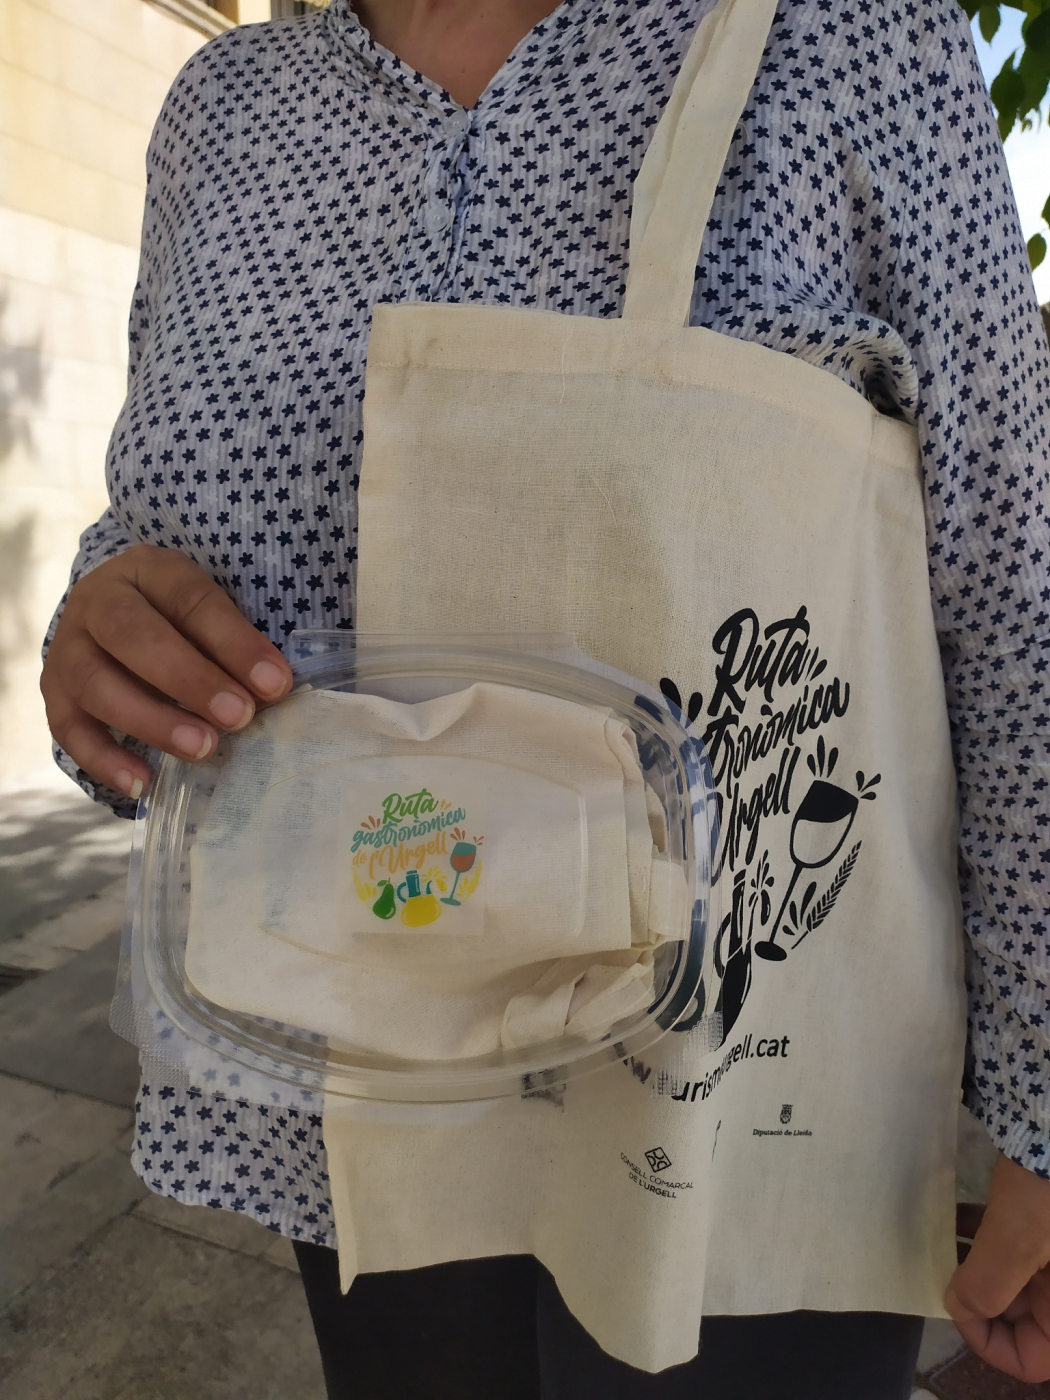 Turisme Urgell dissenya bosses i carmanyoles biodegradables